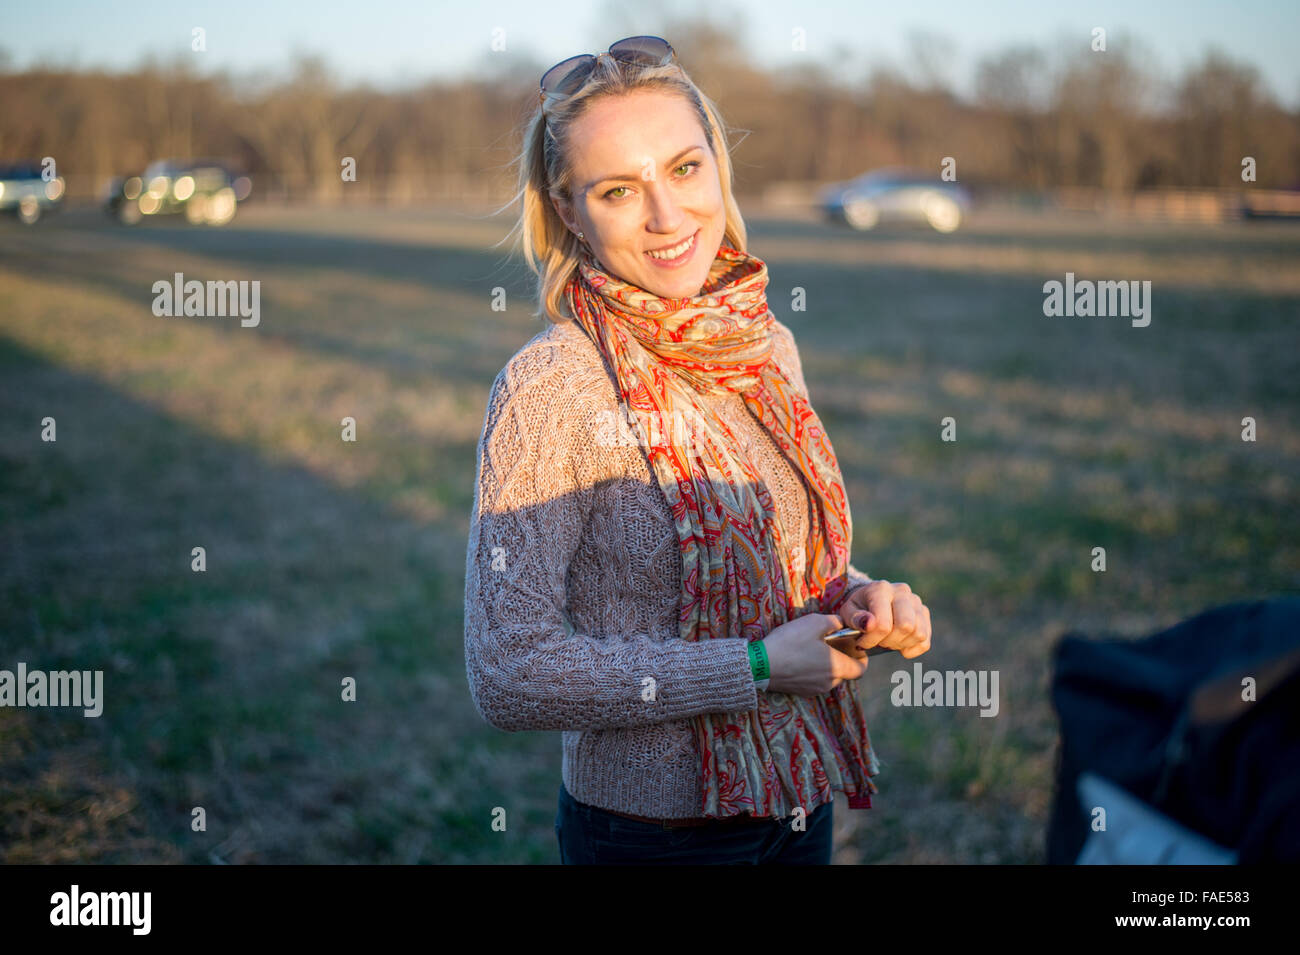 Blonde girl smiling on farm Banque D'Images